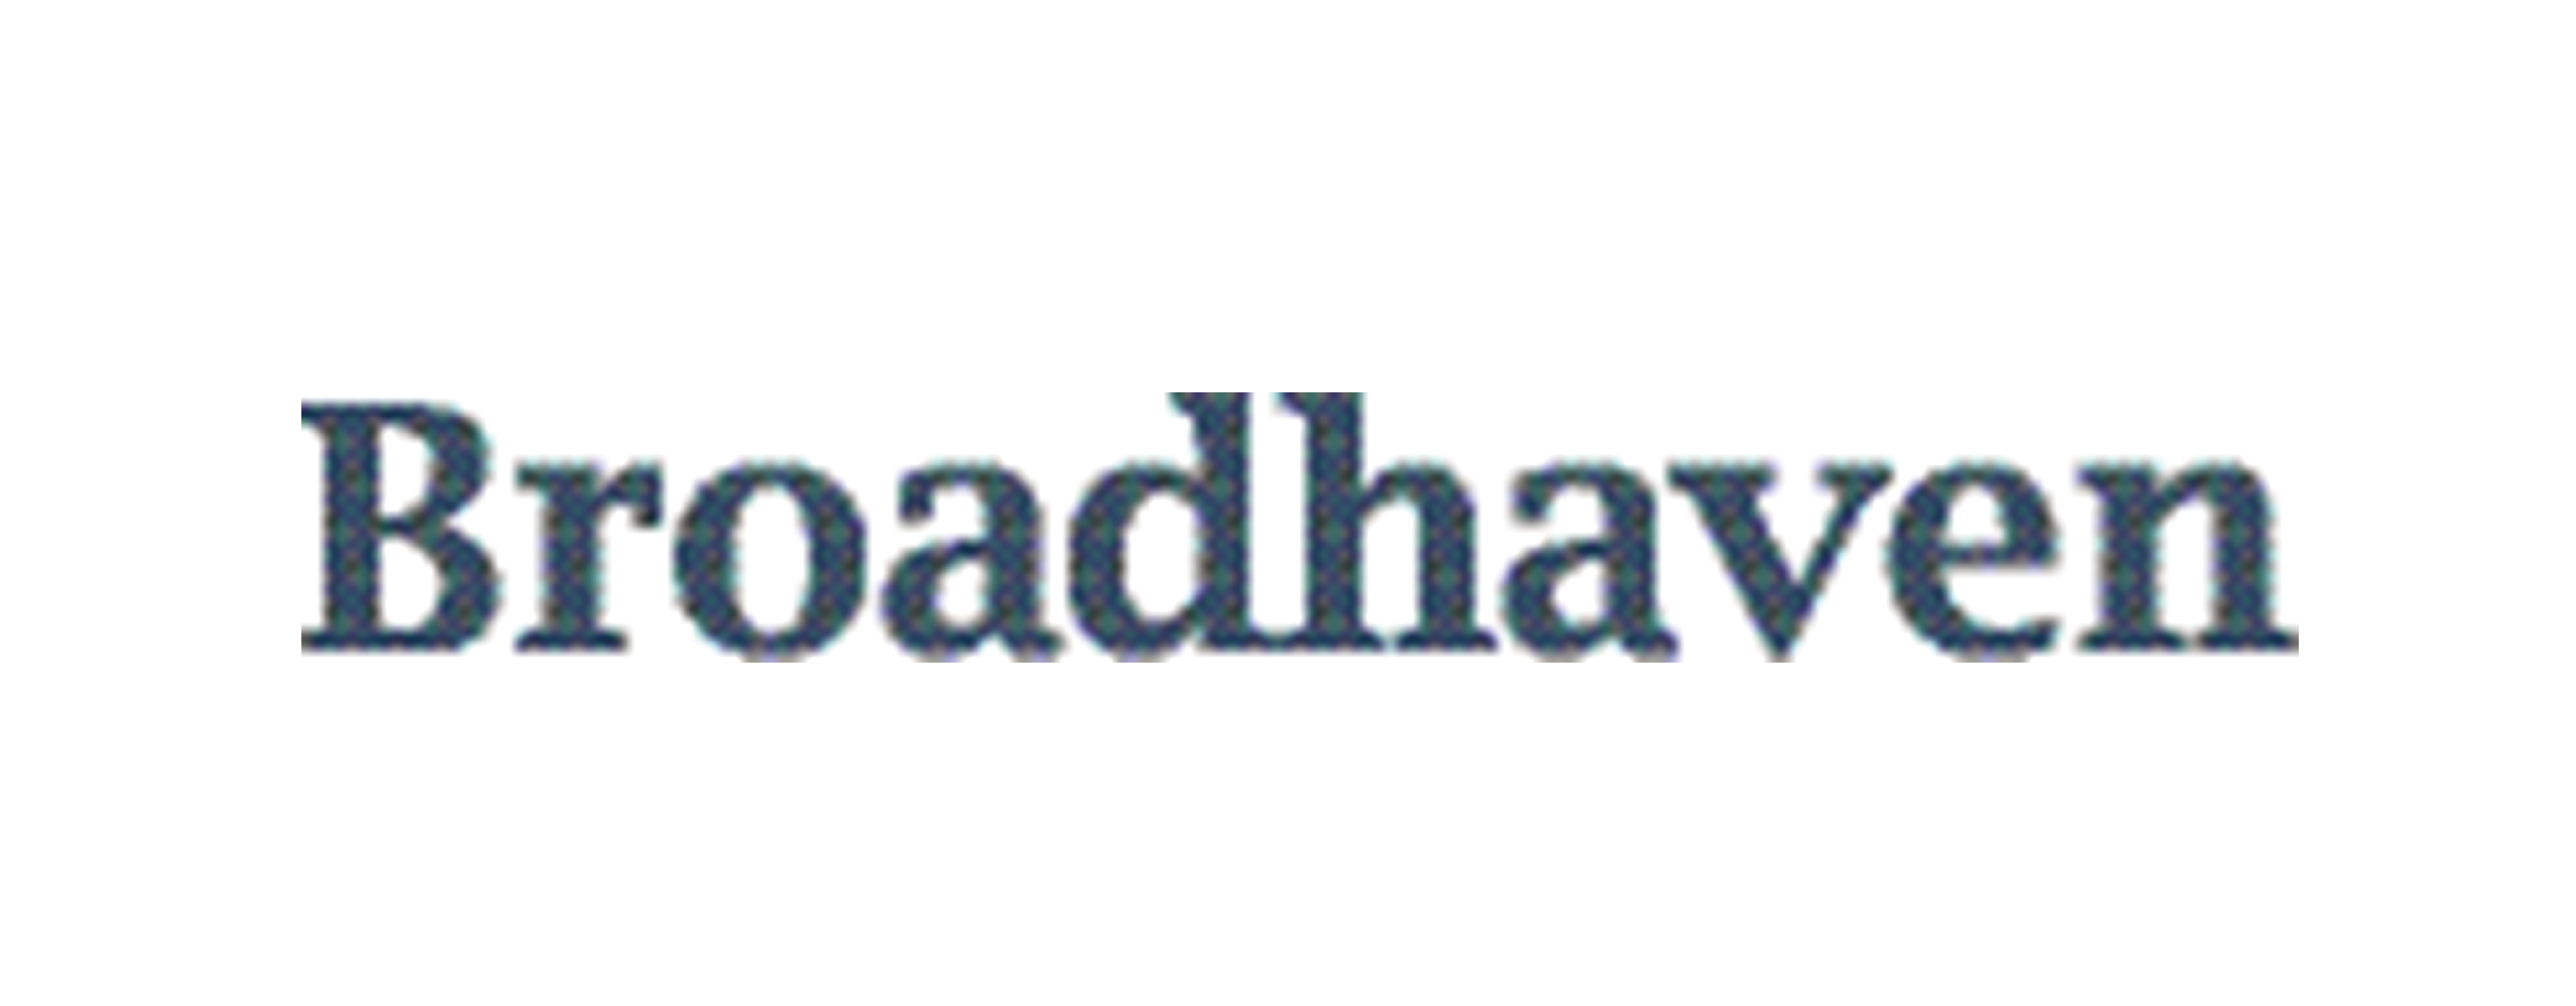 Broadhaven logo